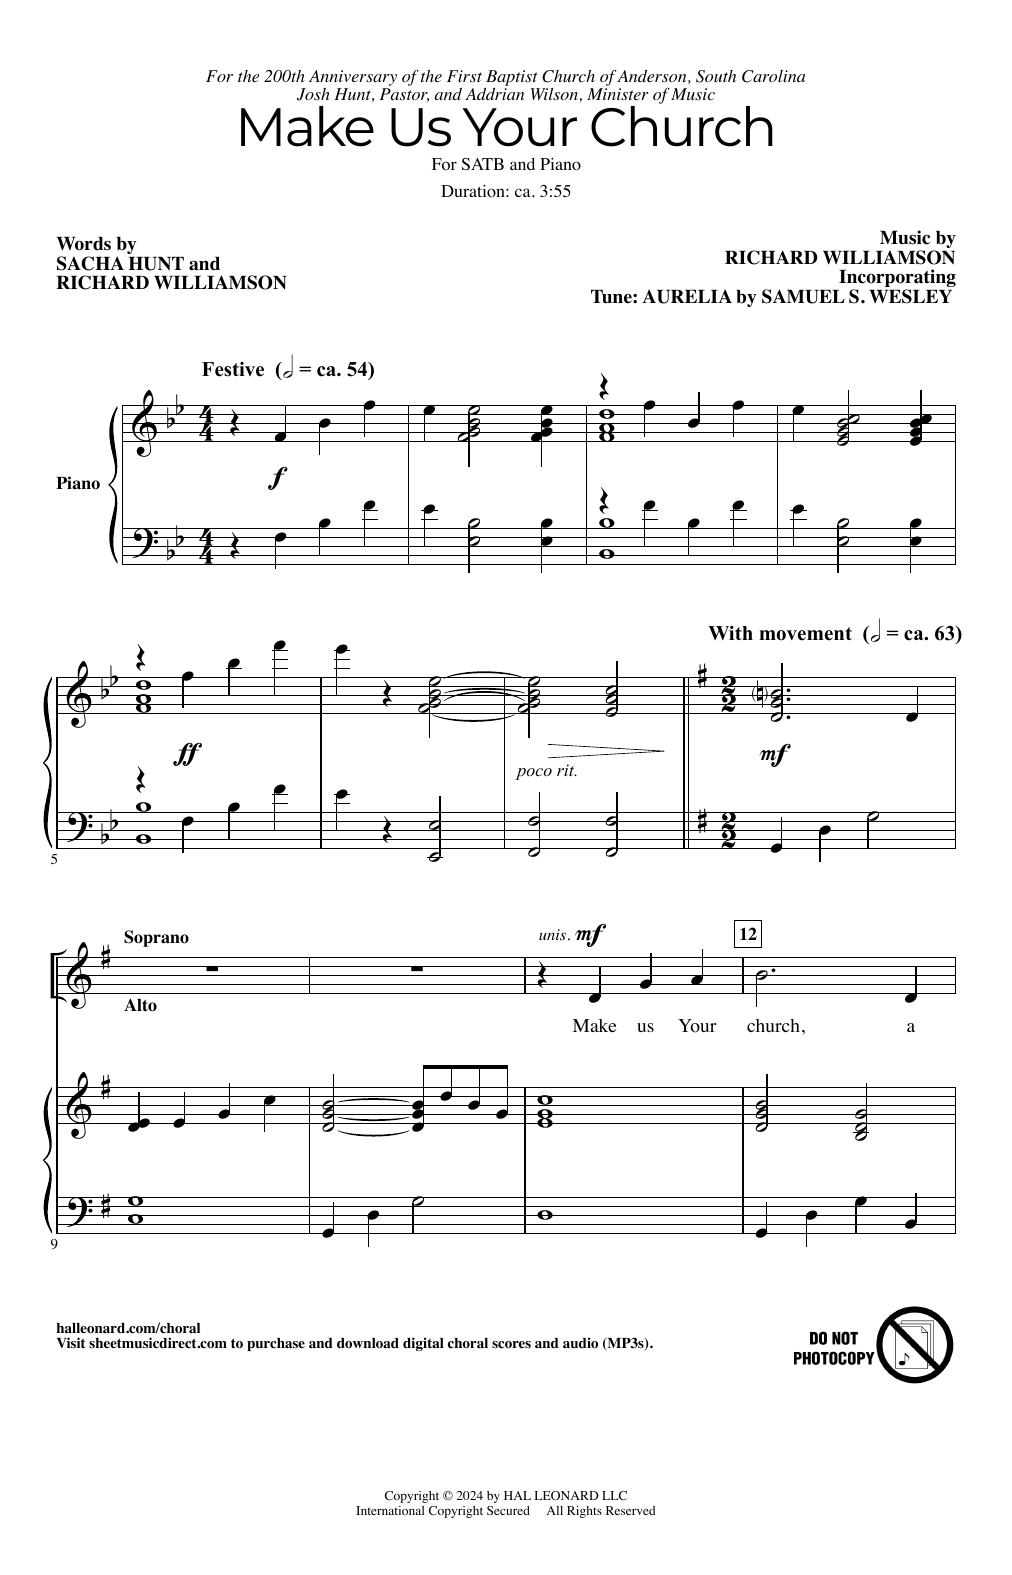 Richard Williamson and Sacha Hunt Make Us Your Church Sheet Music Notes & Chords for SATB Choir - Download or Print PDF